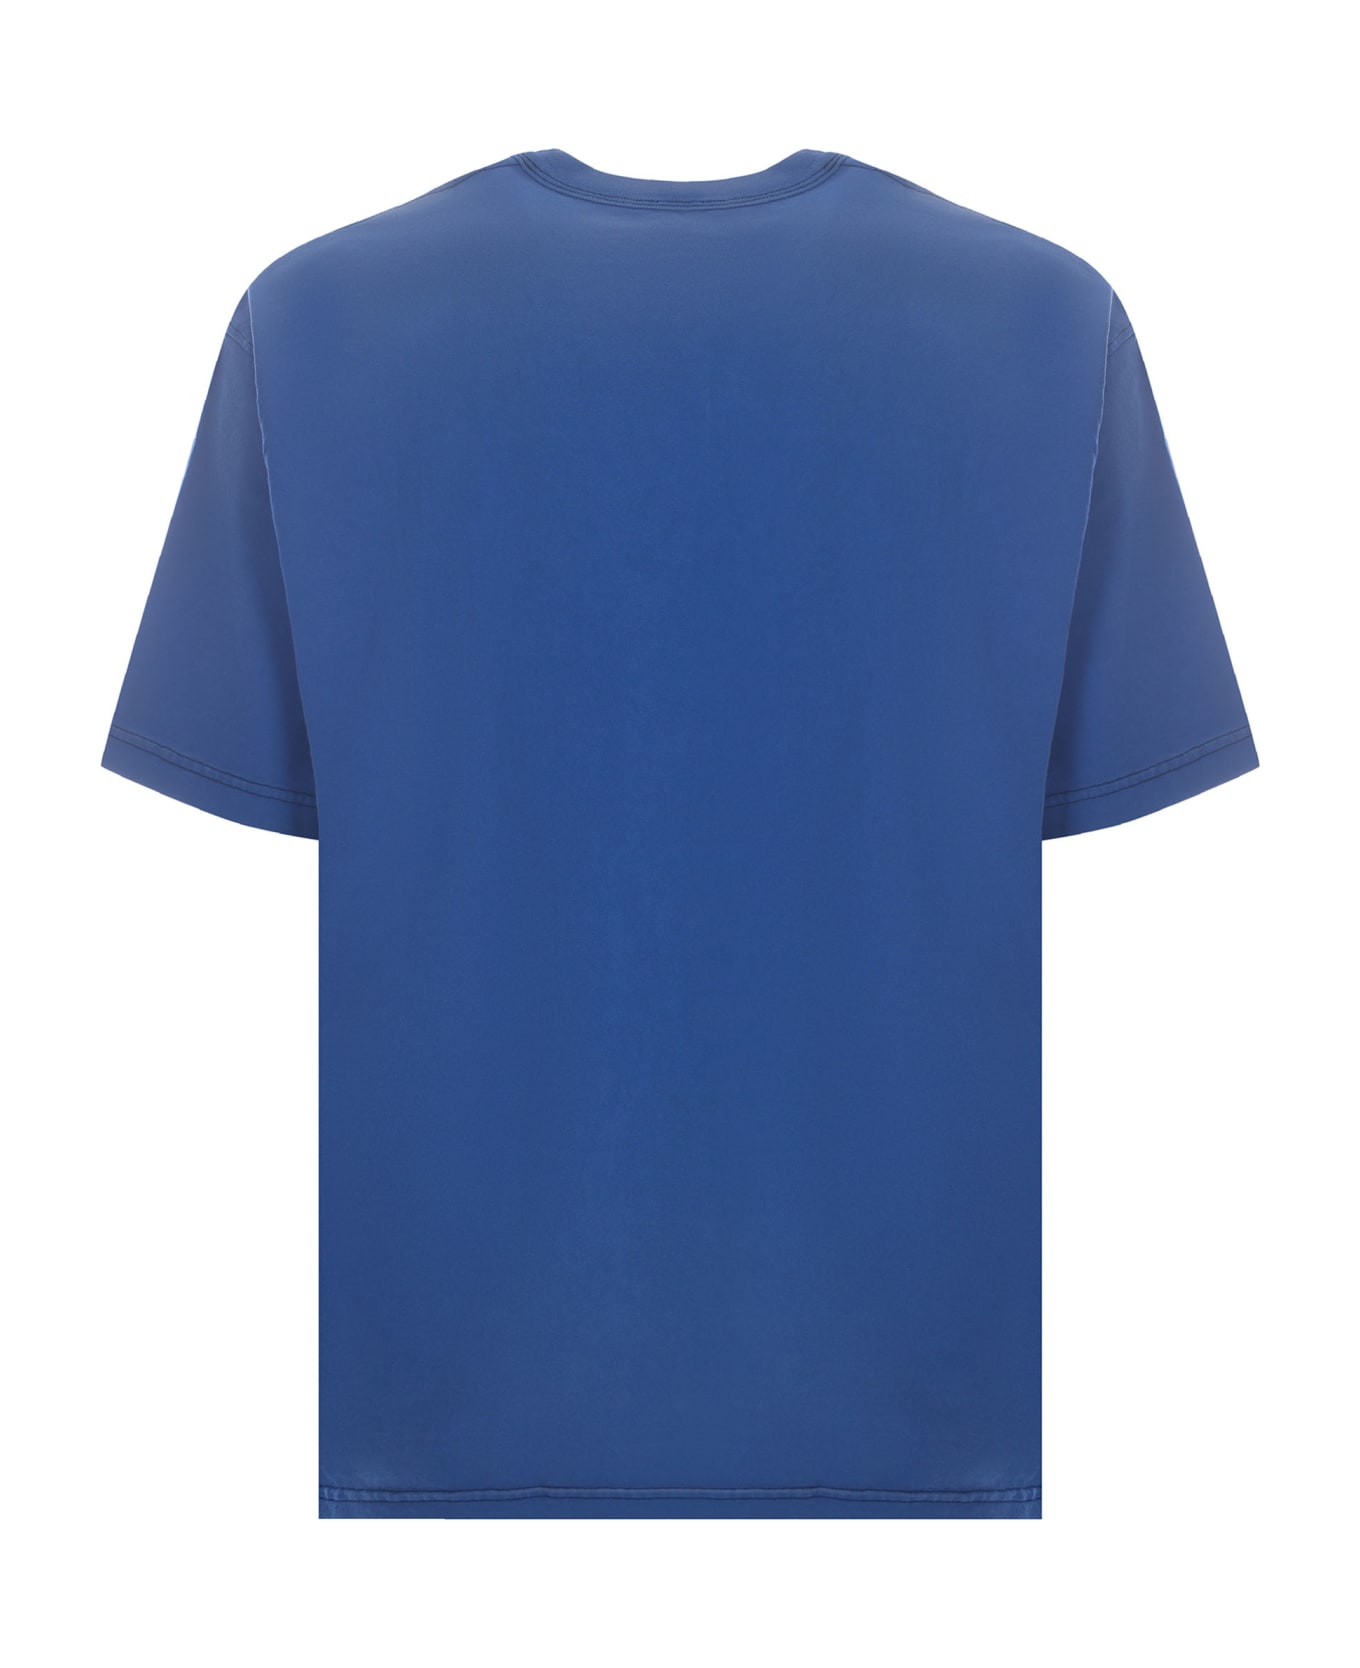 Diesel T-shirt Diesel "t-wash-n" Made Of Cotton Jersey - Bluette シャツ